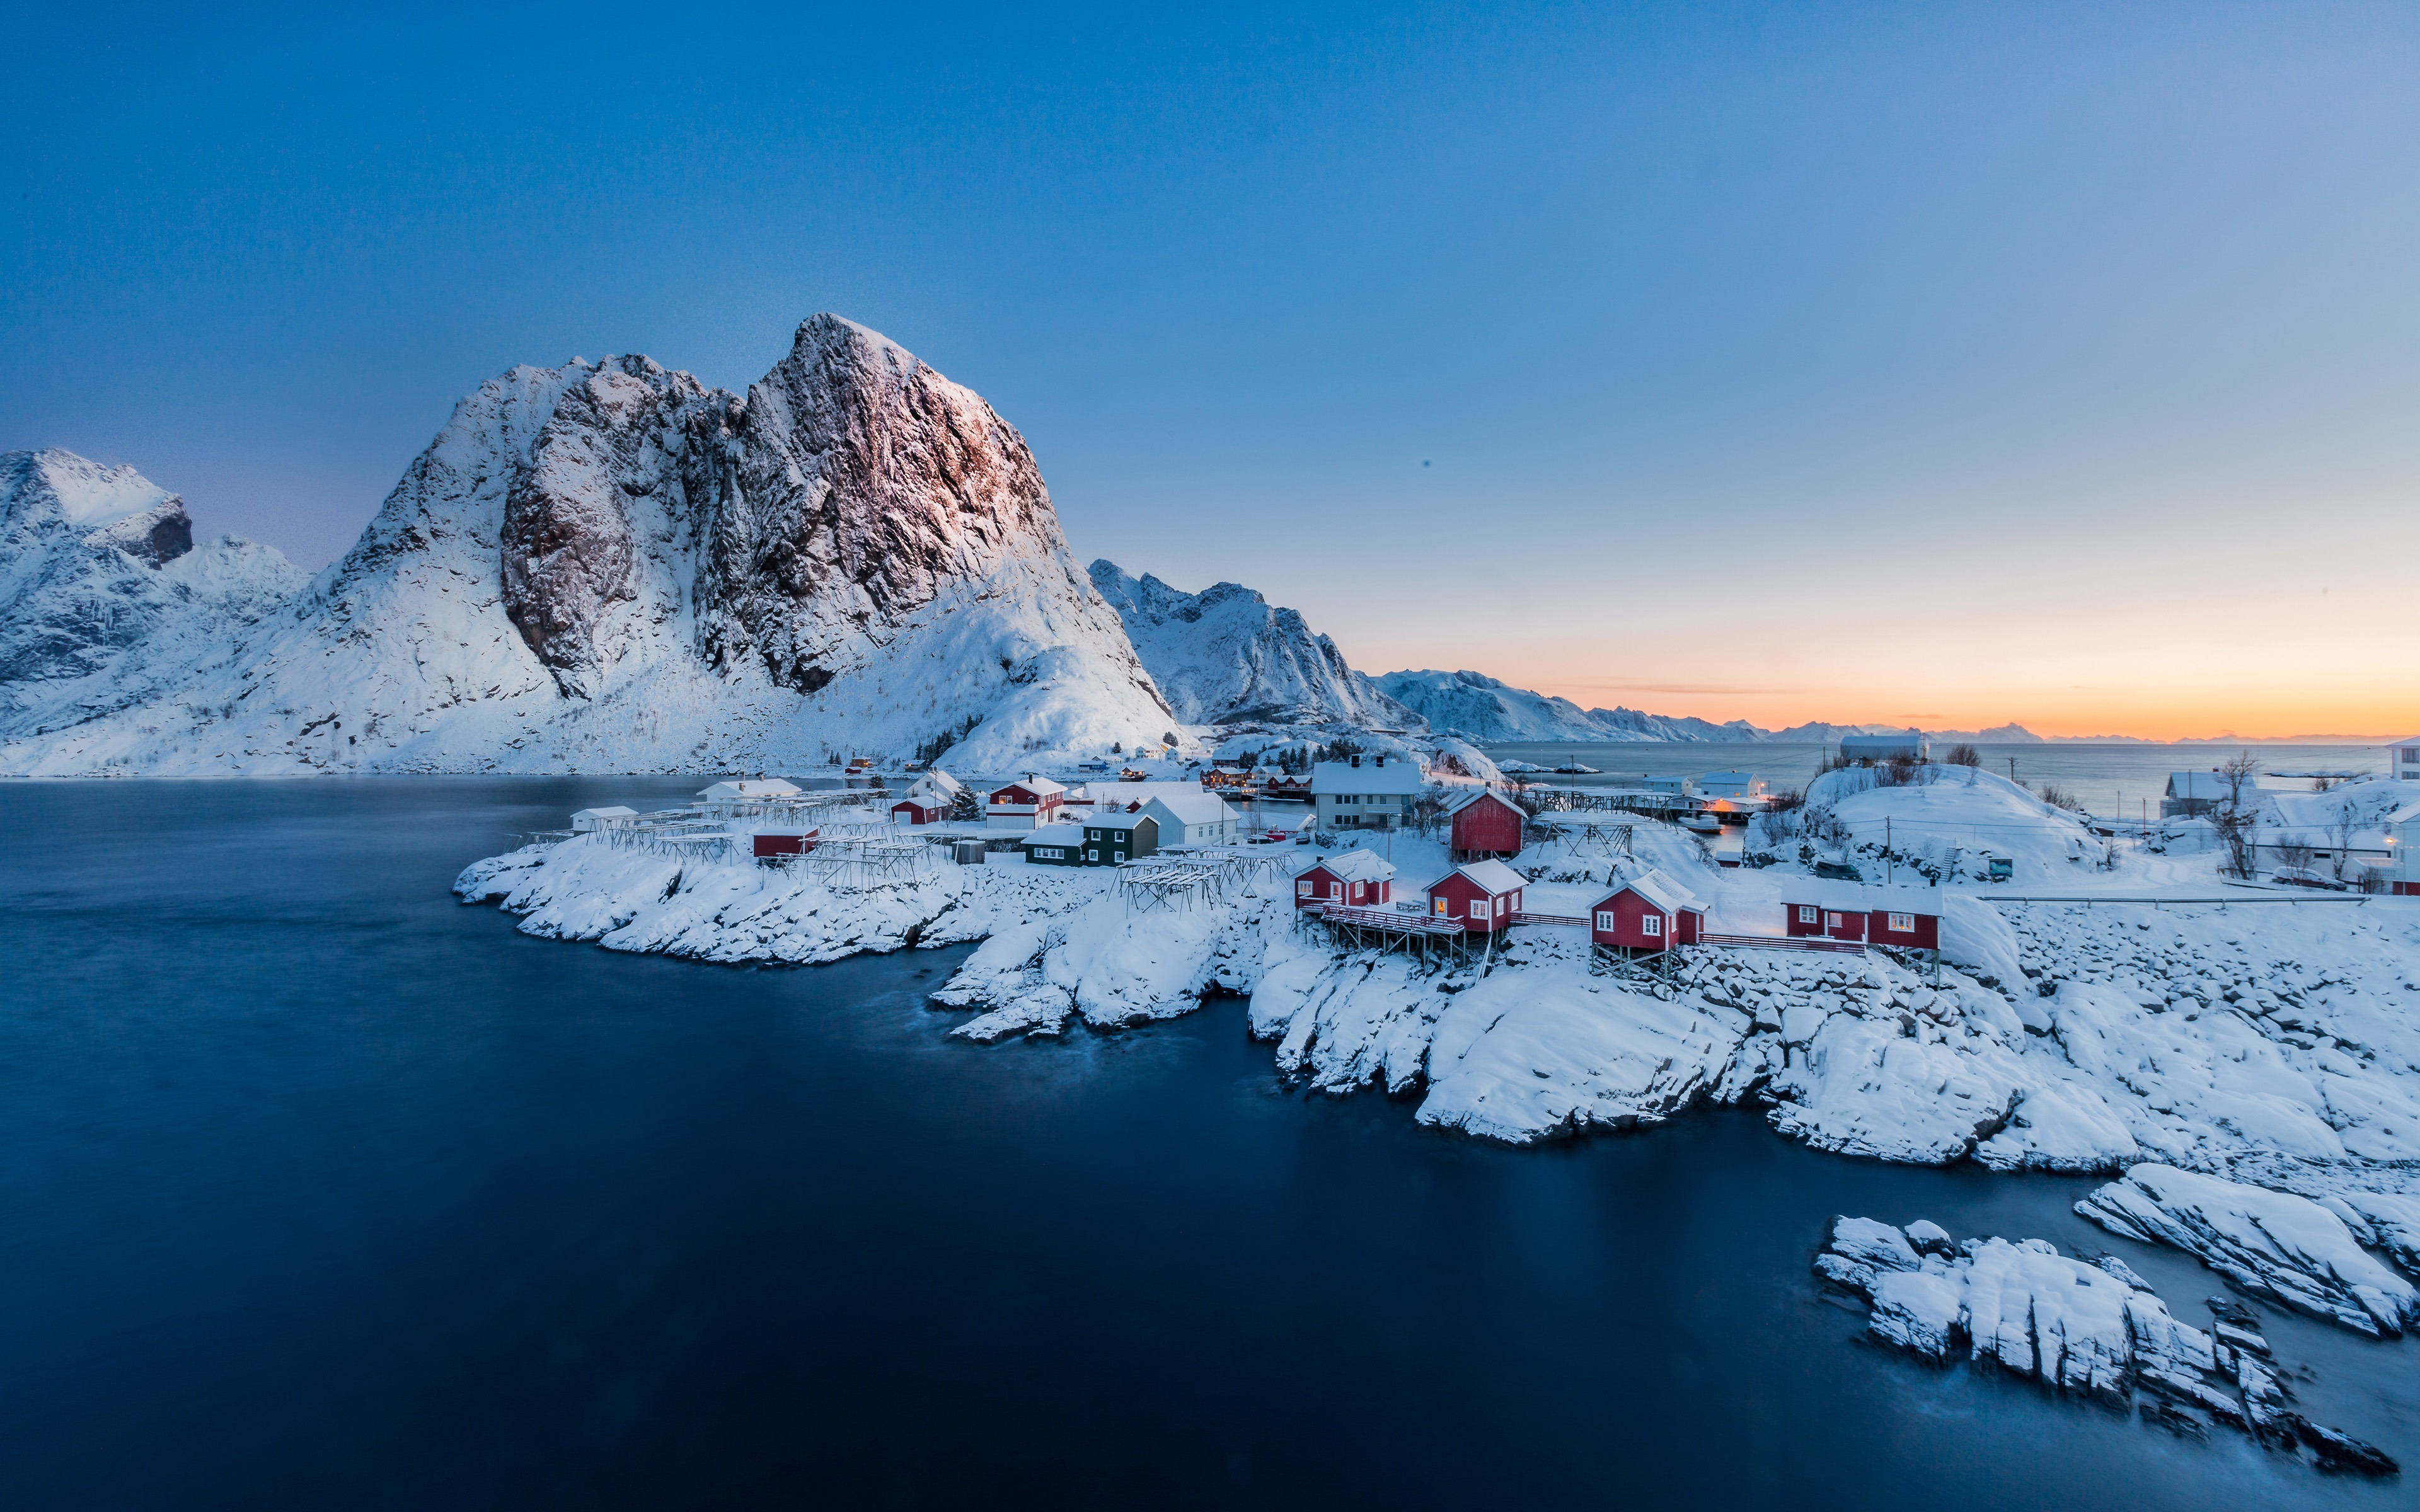 Red houses on the ocean in Norway